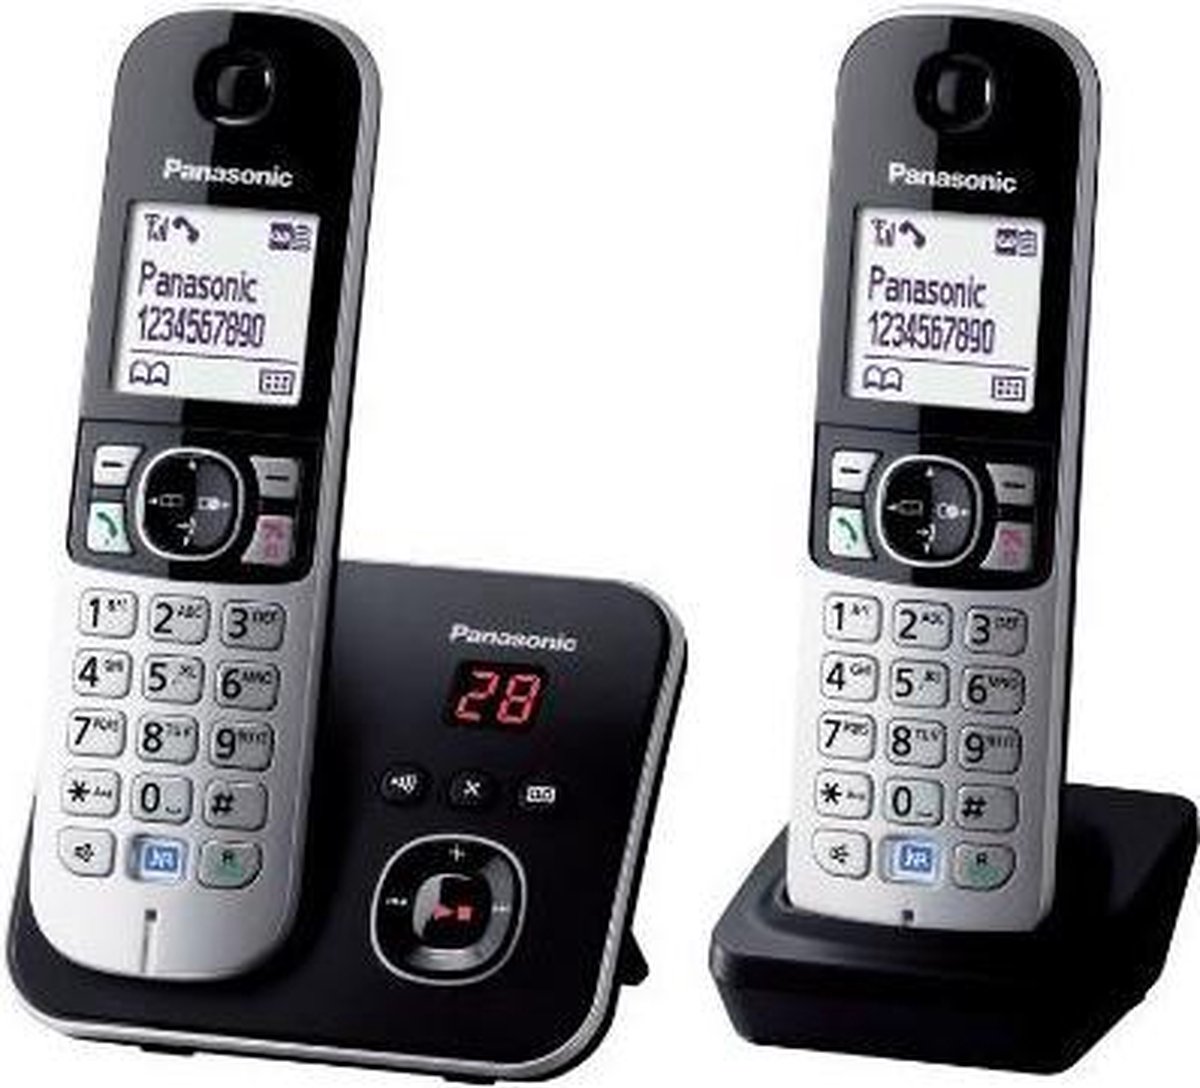 Panasonic KX-TG6822 - Duo DECT telefoon - Antwoordapparaat - Zwart/Zilver |  bol.com